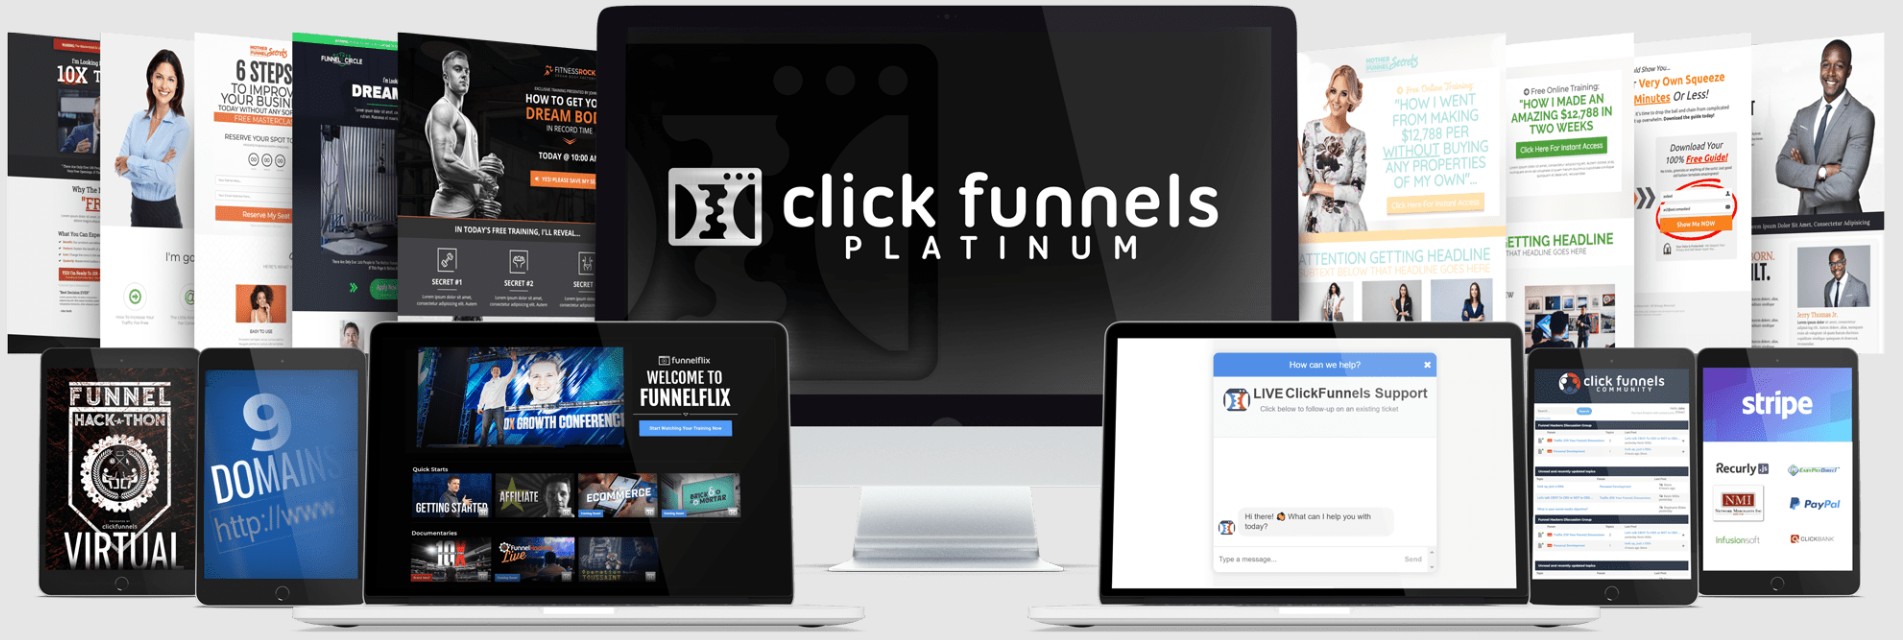 click funnels platinum